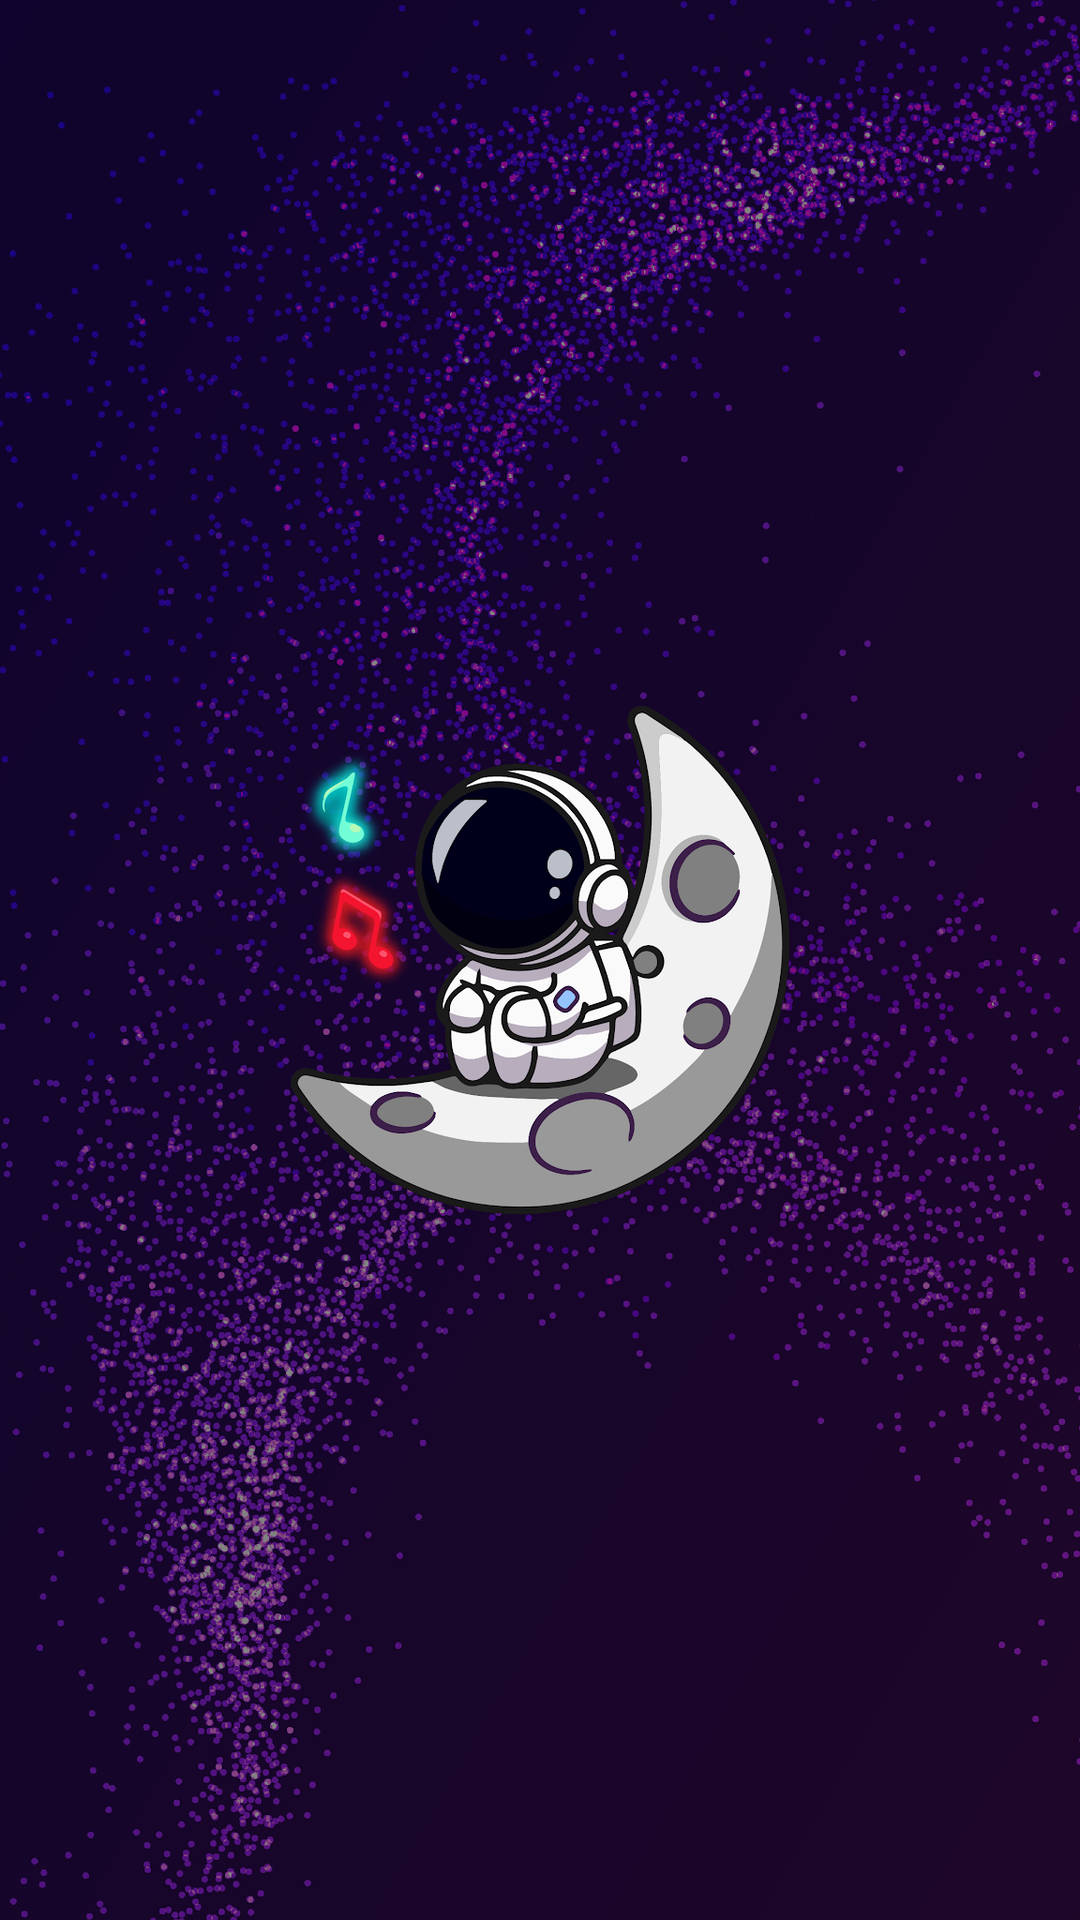 Cartoon Astronaut Singing On The Moon Background